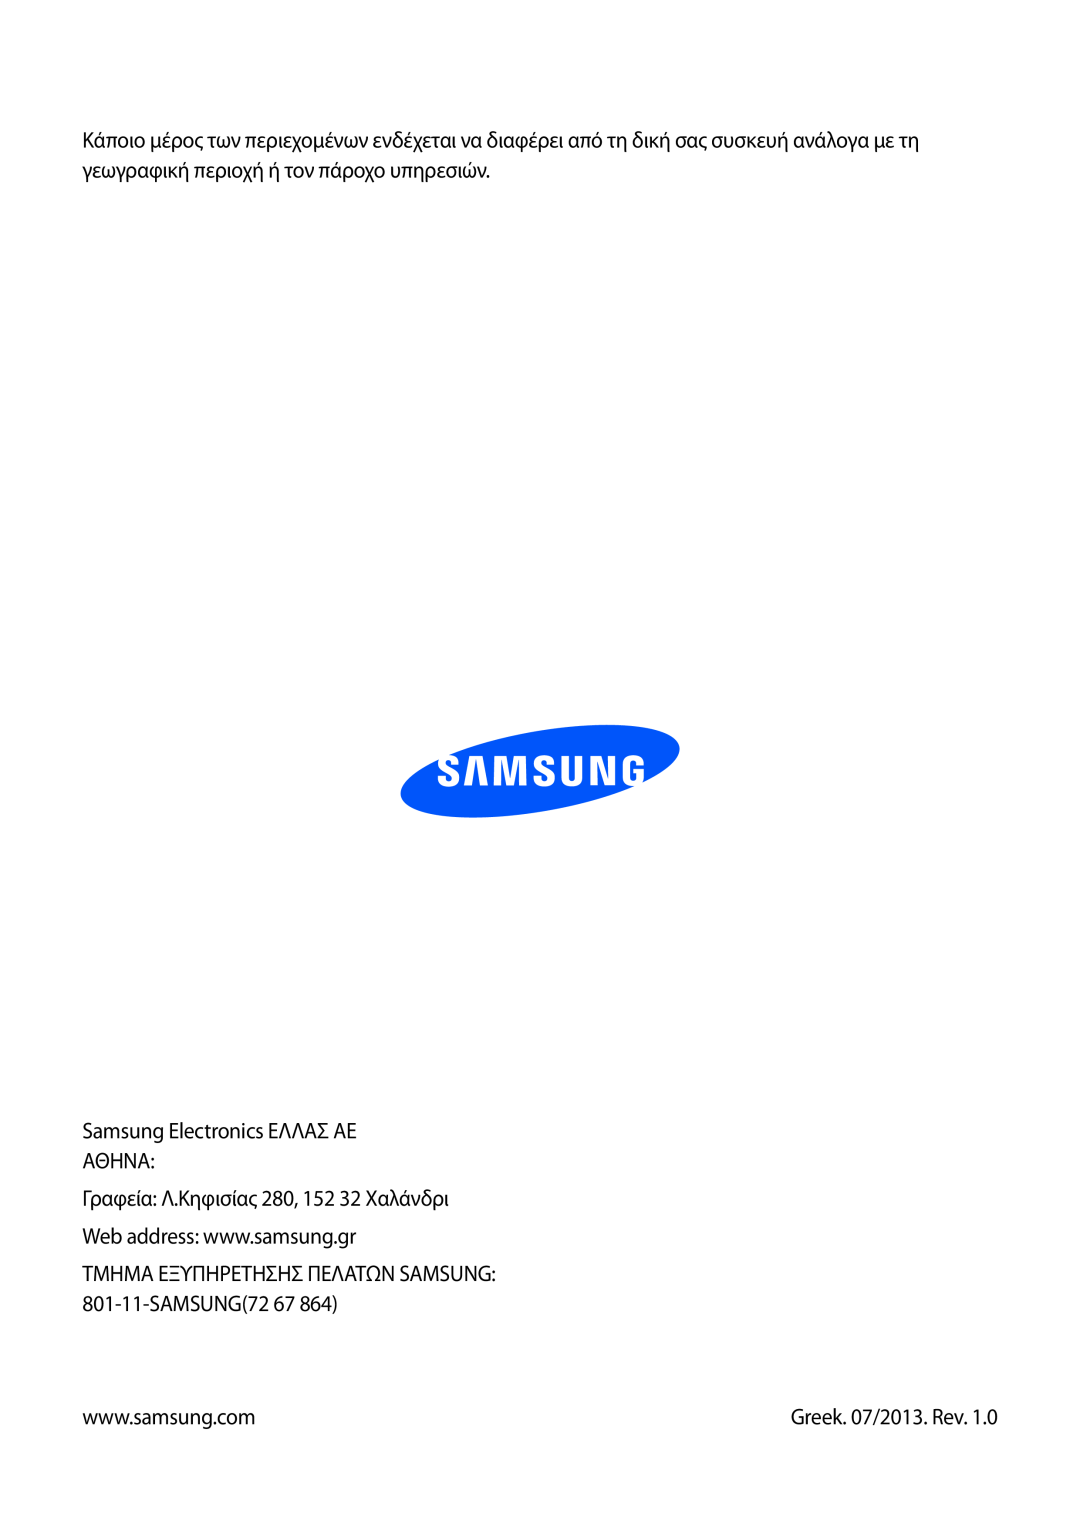 Samsung GT-S7710KRACYV Samsung Electronics ΕΛΛΑΣ ΑΕ ΑΘΗΝΑ, Γραφεία Λ.Κηφισίας 280, 152 32 Χαλάνδρι, Greek. 07/2013. Rev 